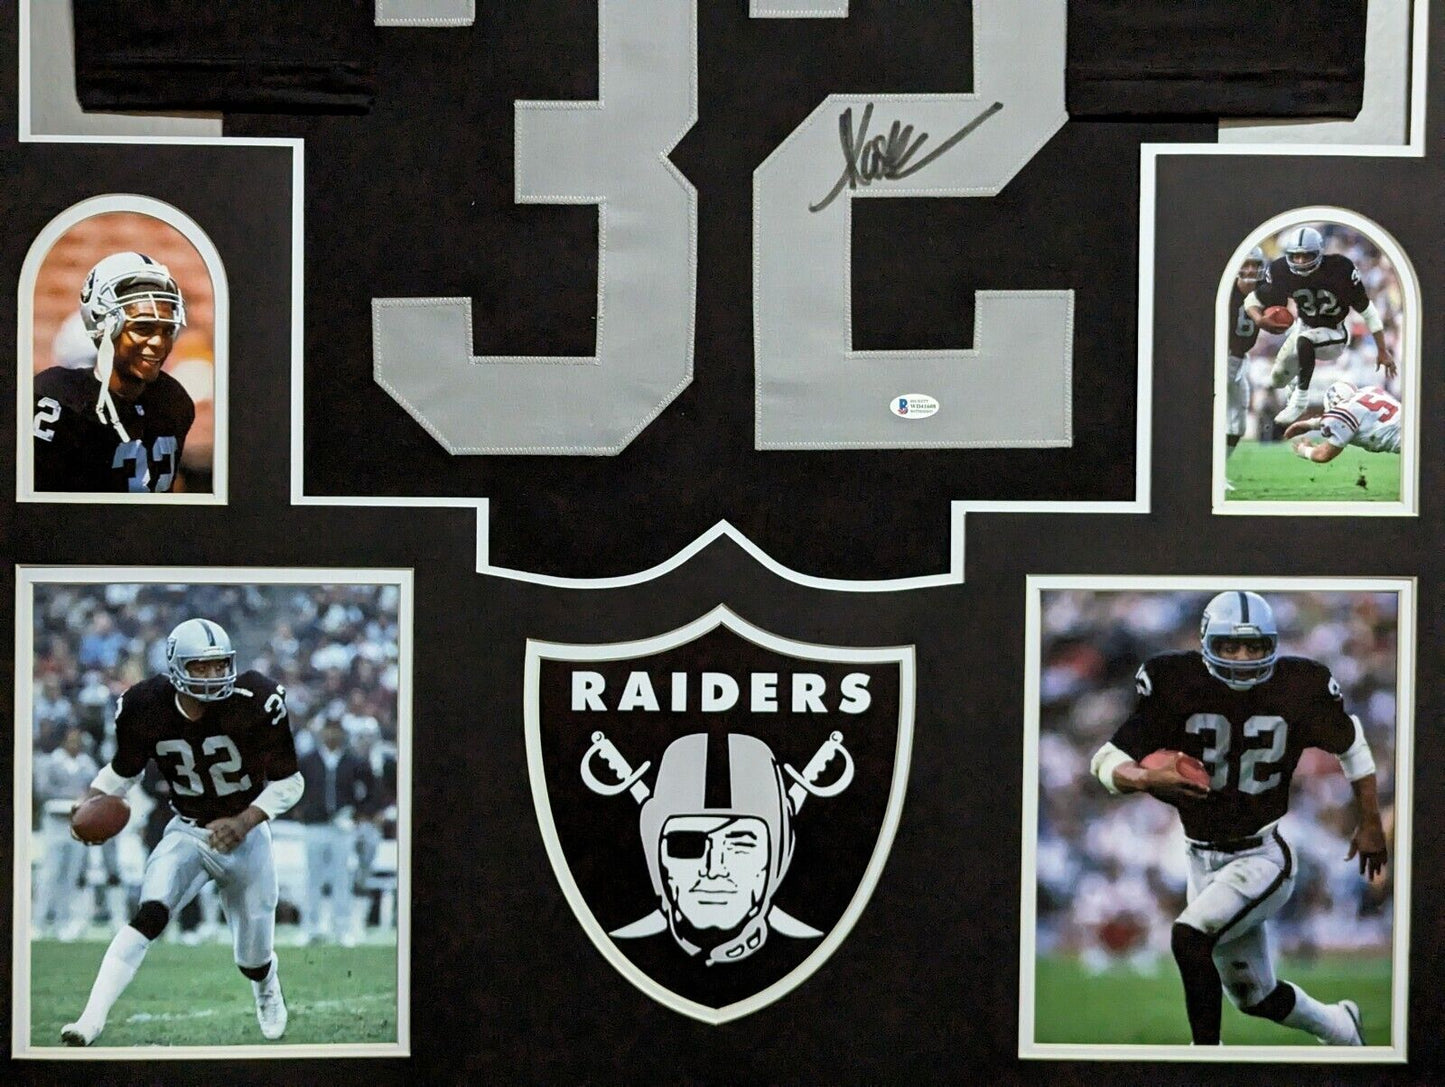 MVP Authentics Framed Oakland Raiders Marcus Allen Autographed Signed Jersey Beckett Coa 450 sports jersey framing , jersey framing